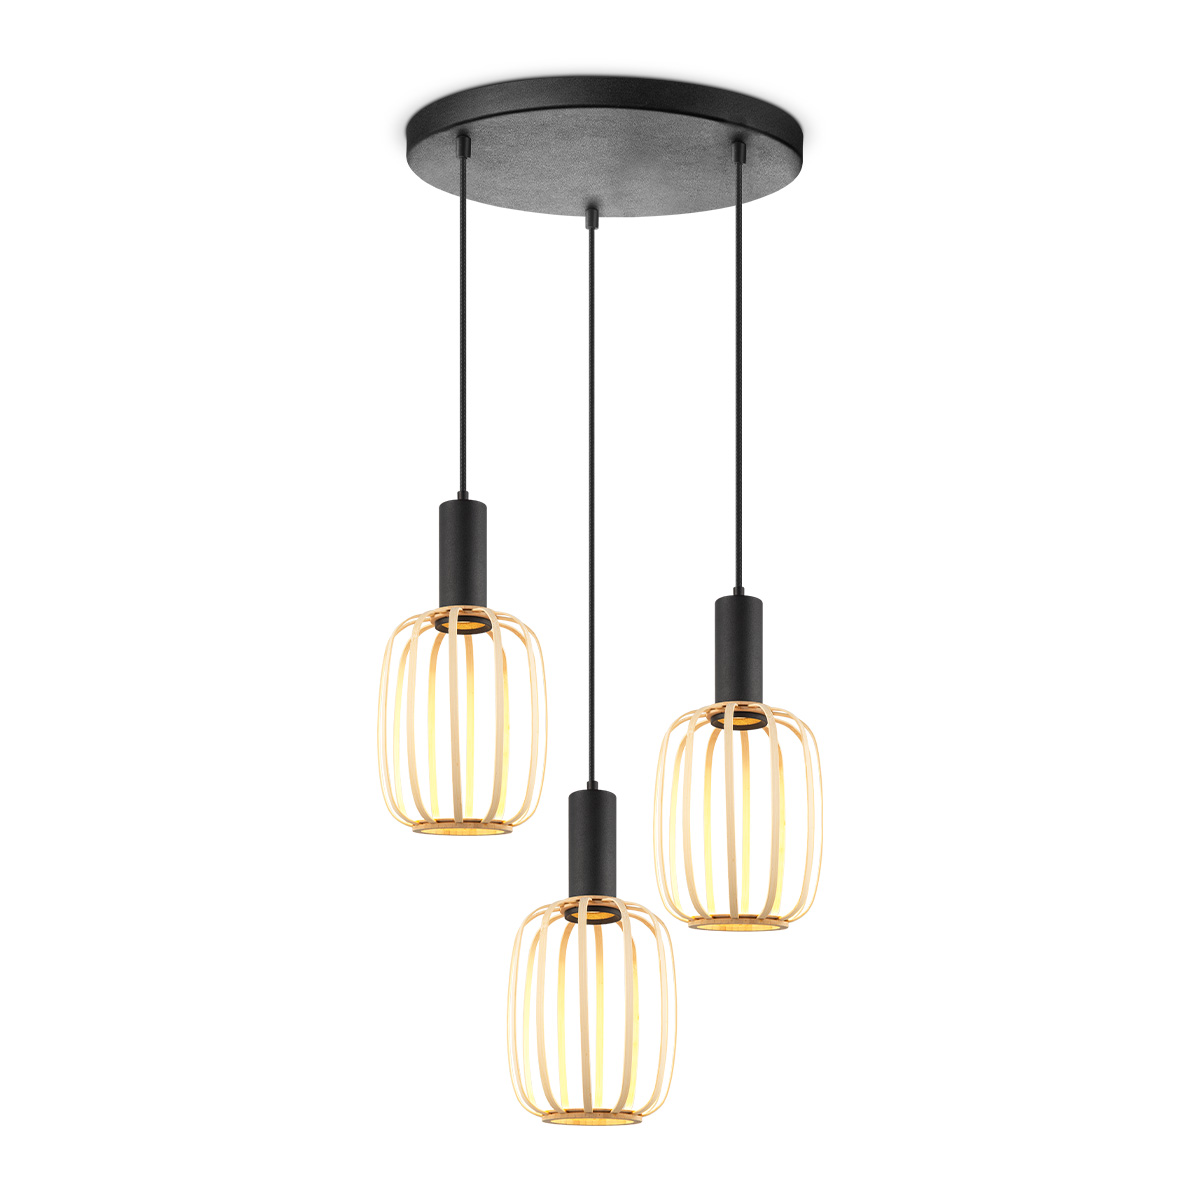 Tangla lighting - TLP7648-03RNT - LED pendant lamp 3 lights - round FSC wooden lamp - natural - natural netting series